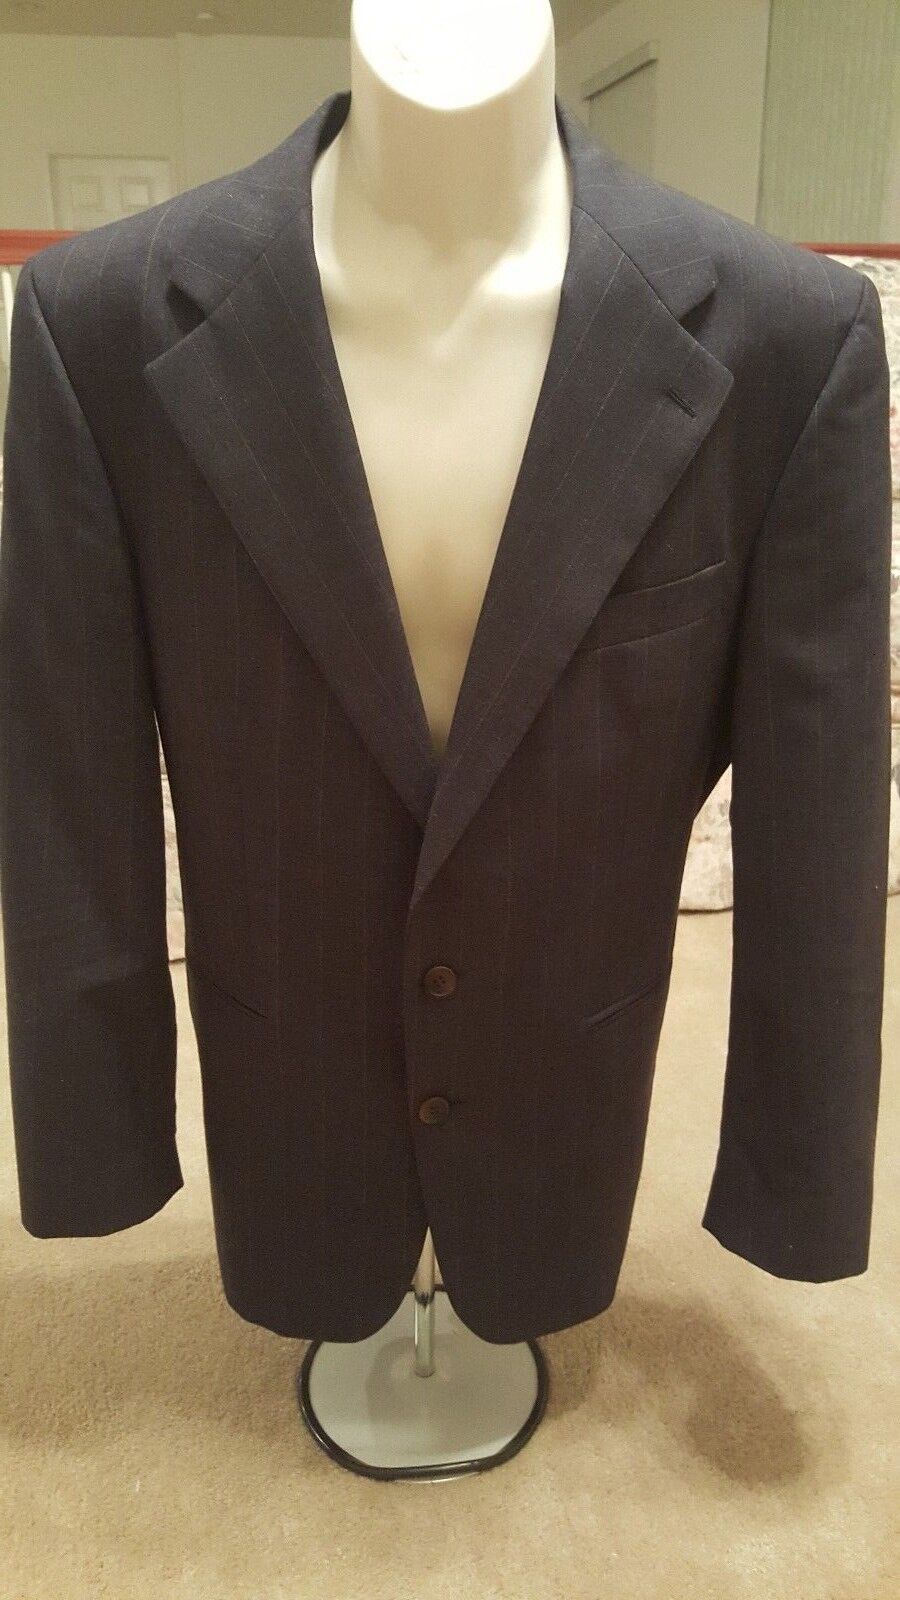 Chaps Ralph Lauren Sports Blazer Coat Size 40 R - image 1